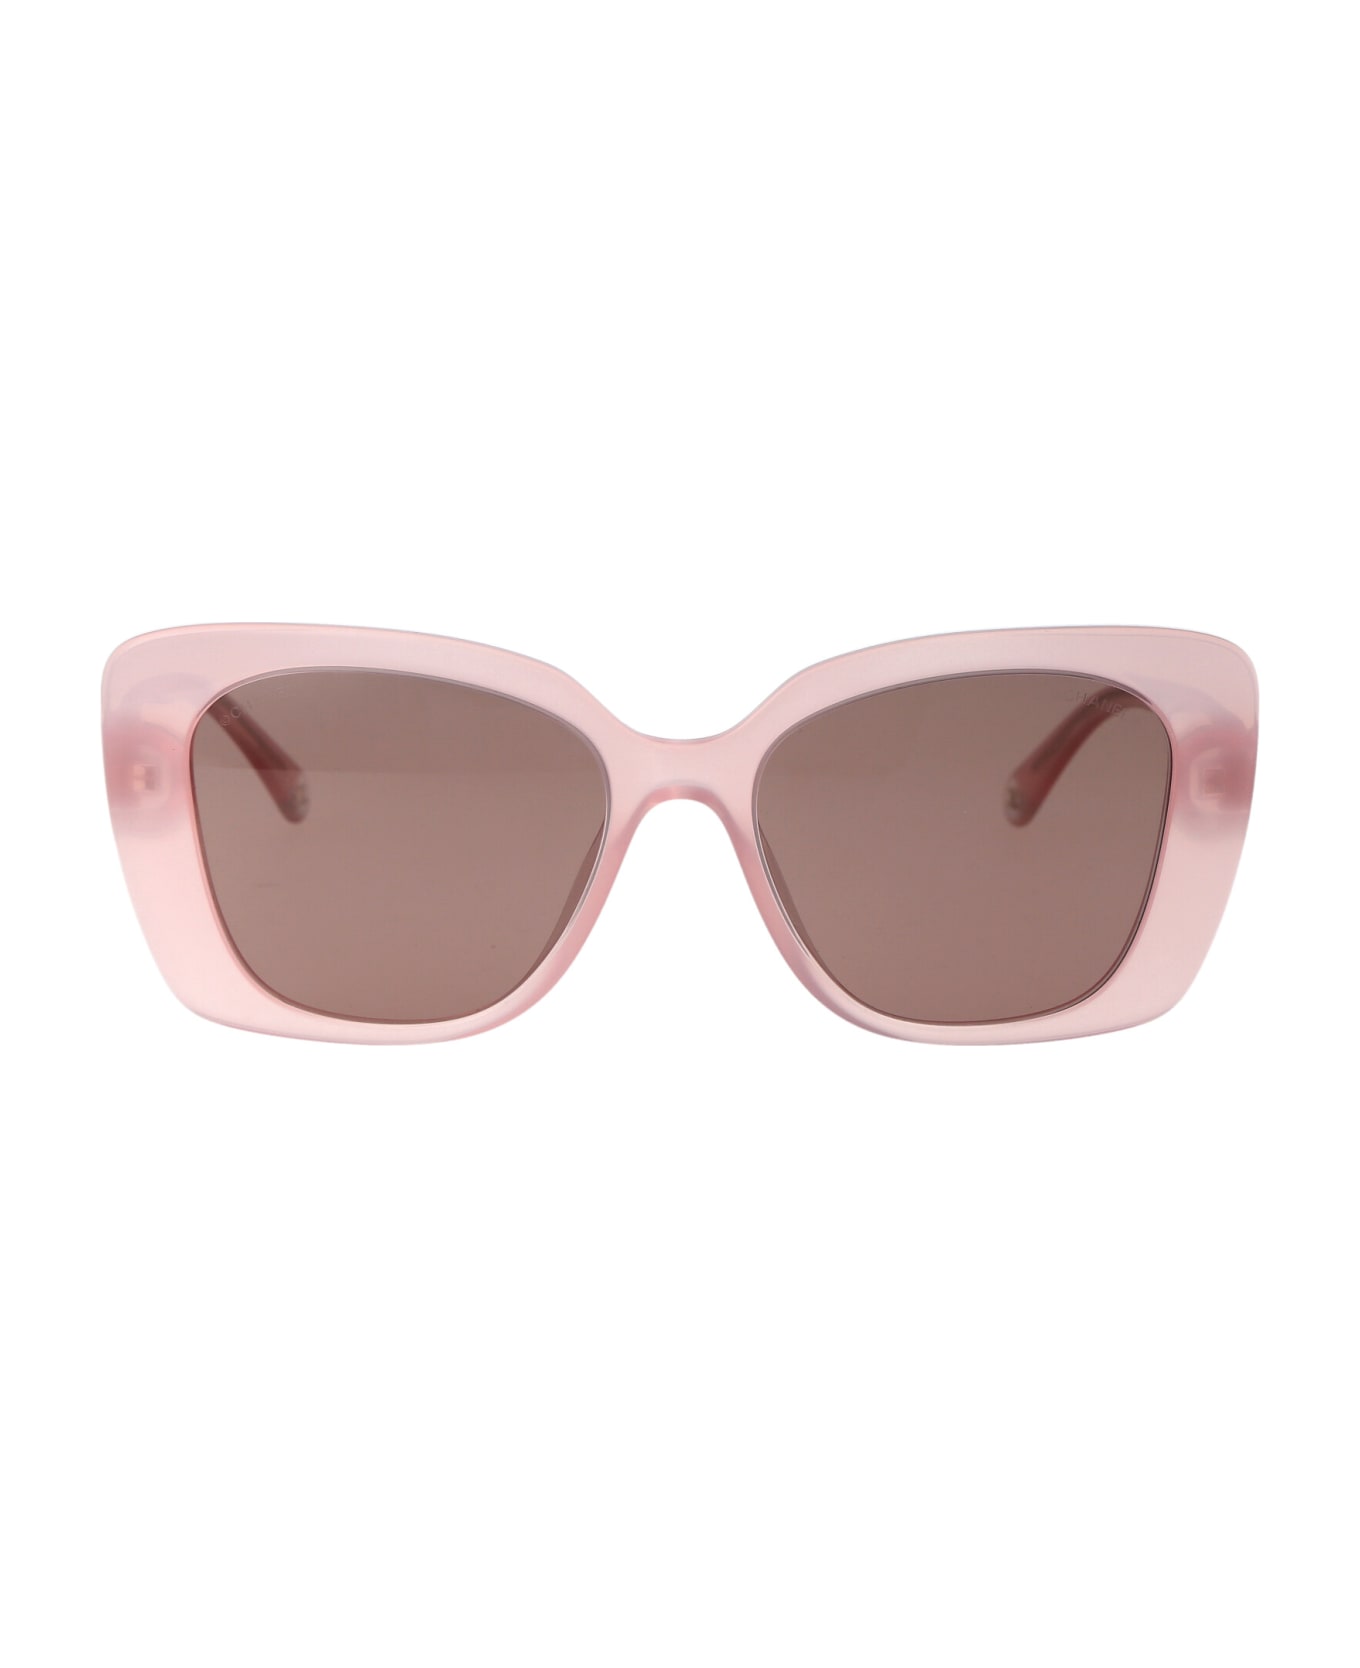 Chanel 0ch5504 Sunglasses - 17334R PINK